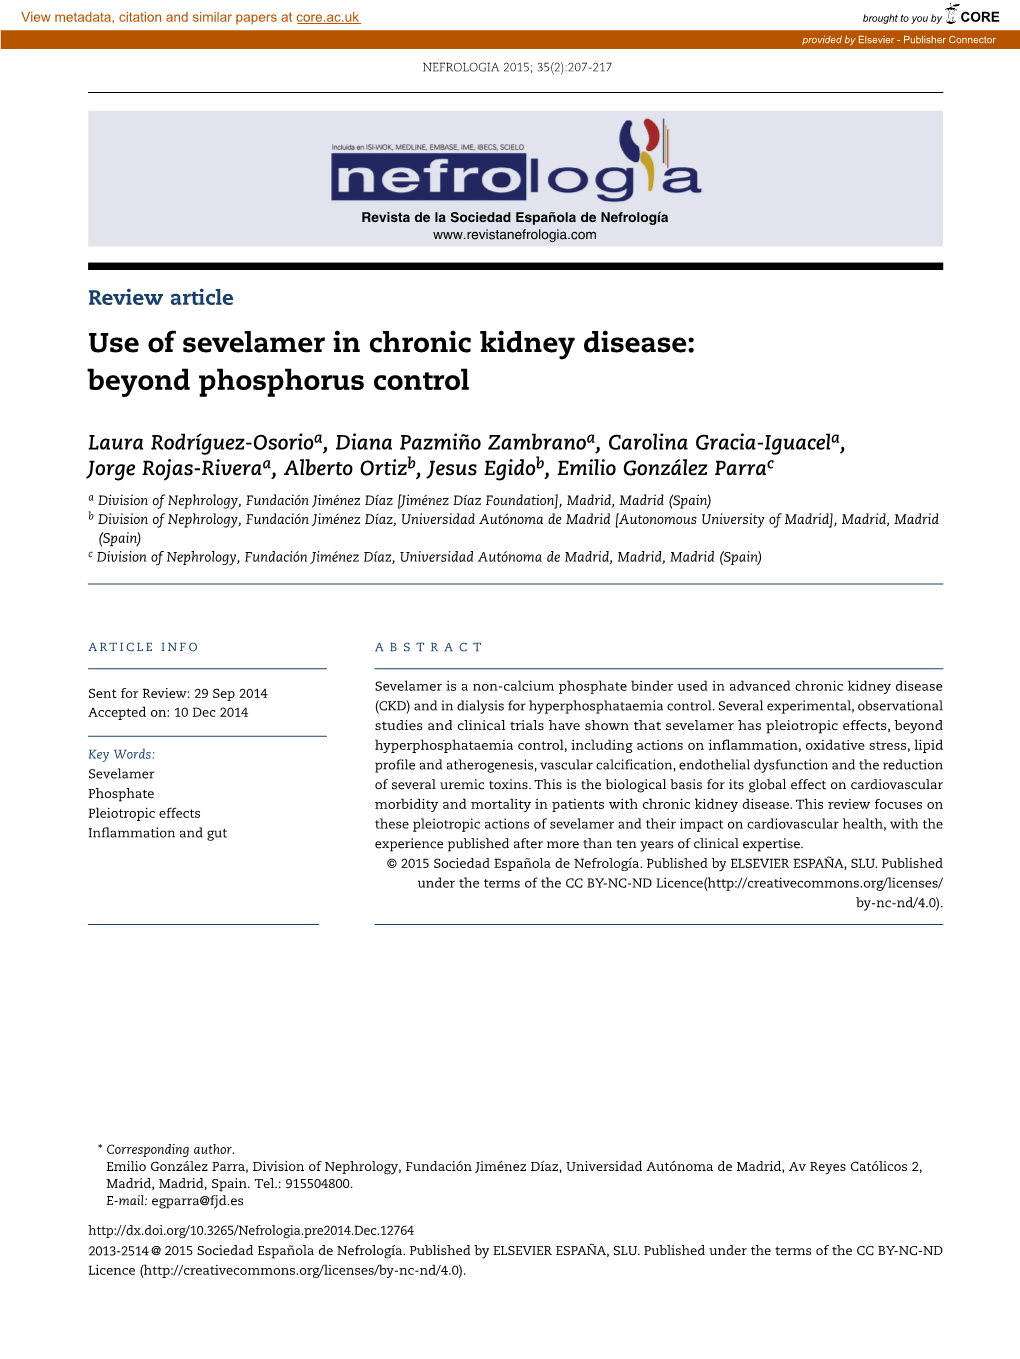 Use of Sevelamer in Chronic Kidney Disease: Beyond Phosphorus Control